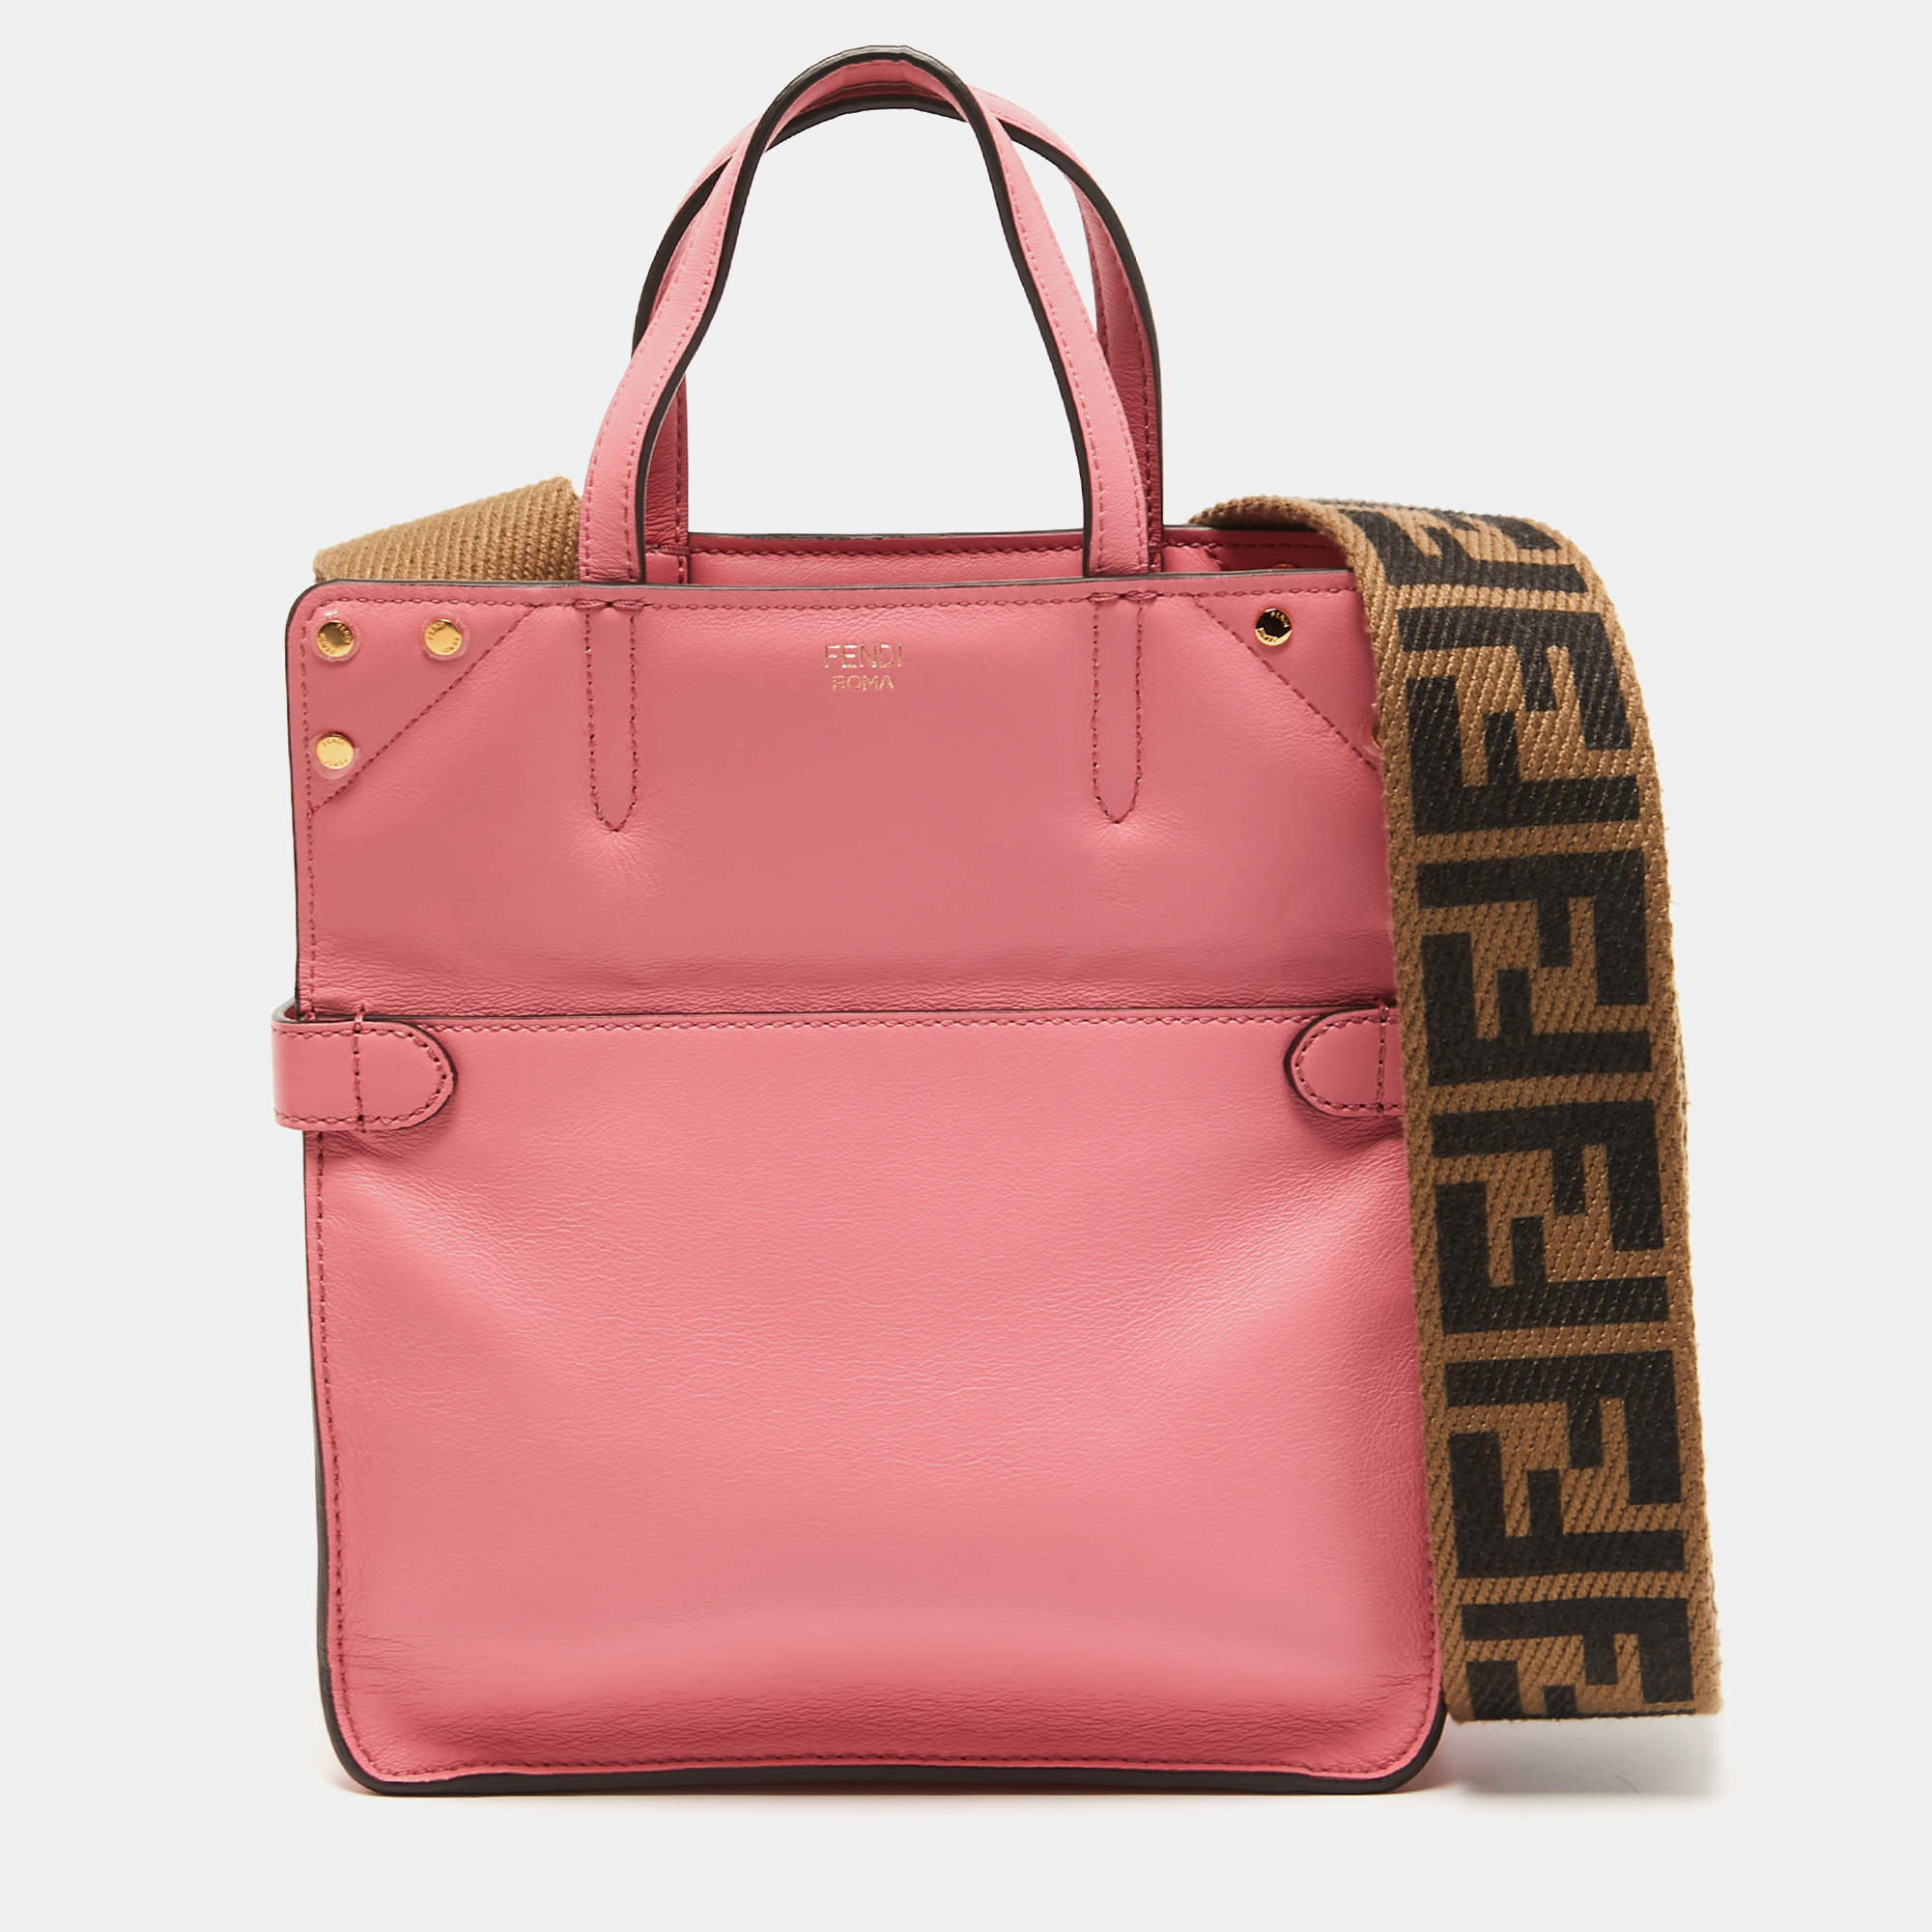 Fendi Pink Leather Small Flip Bag